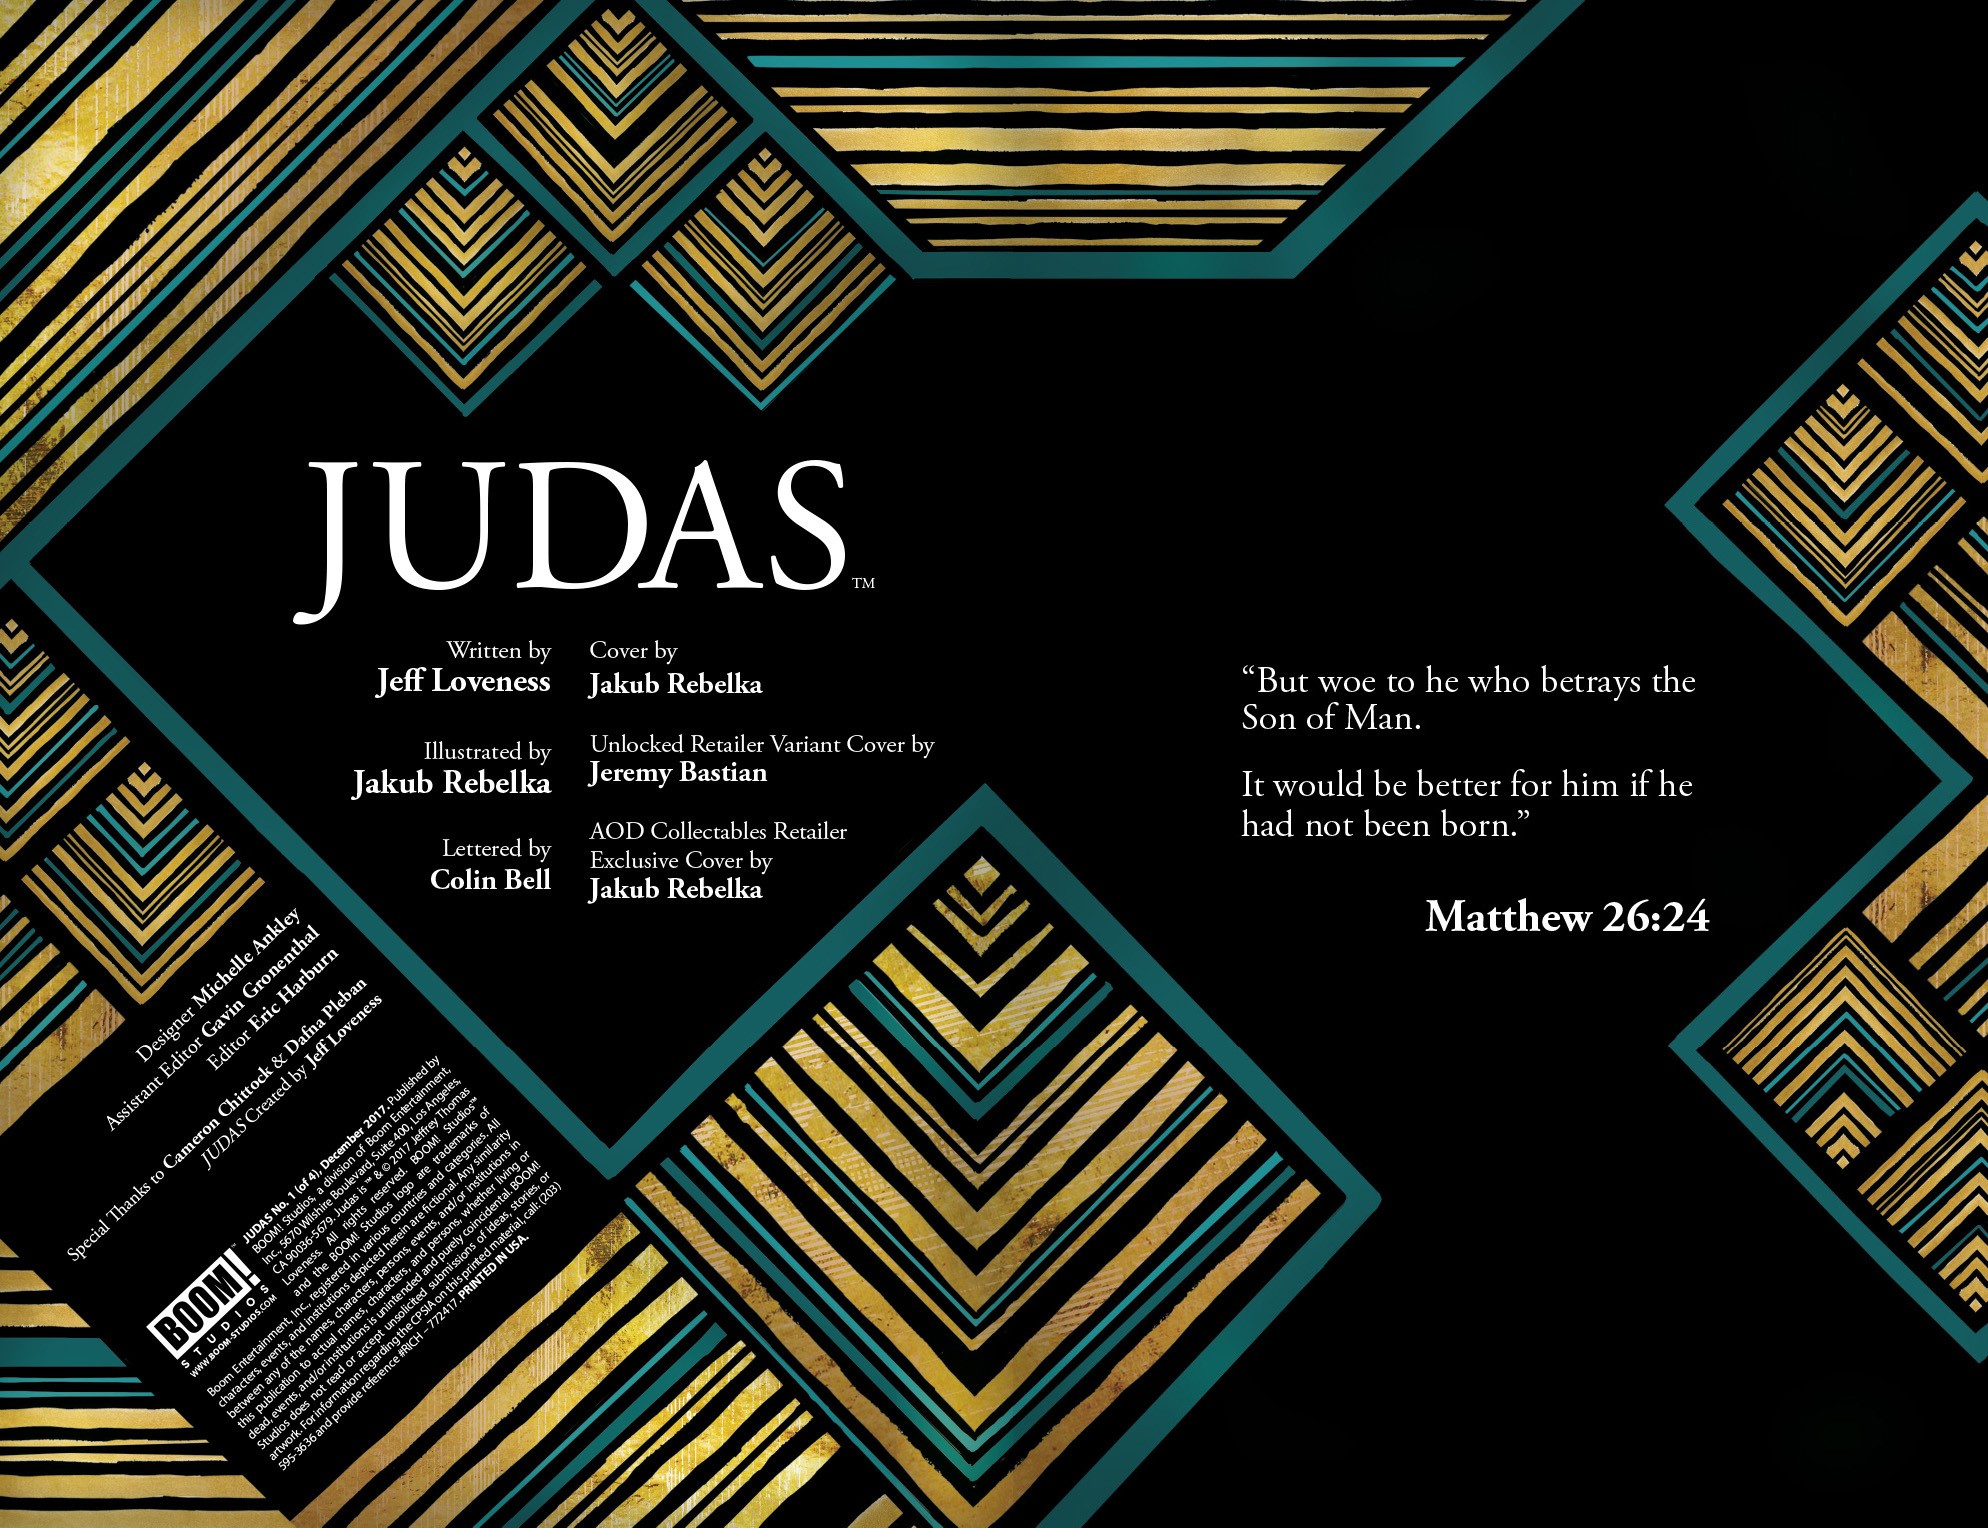 Judas_001_Credits_1-2